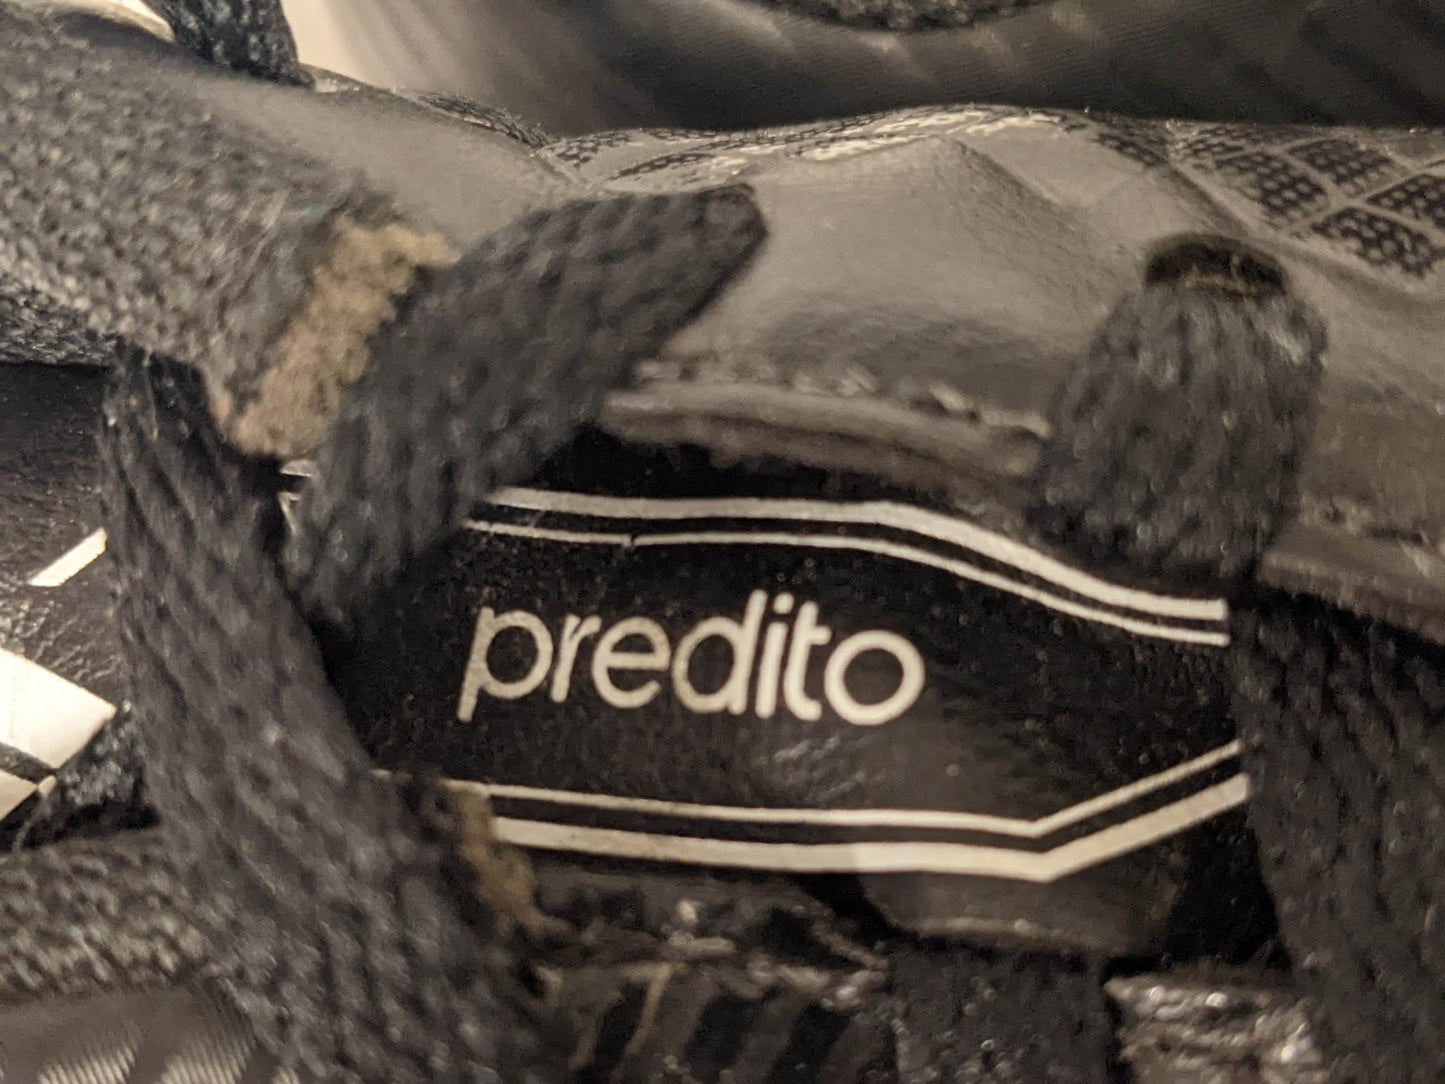 Adidas Predito Athletic Shoes Size 3 Color Black Condition Used